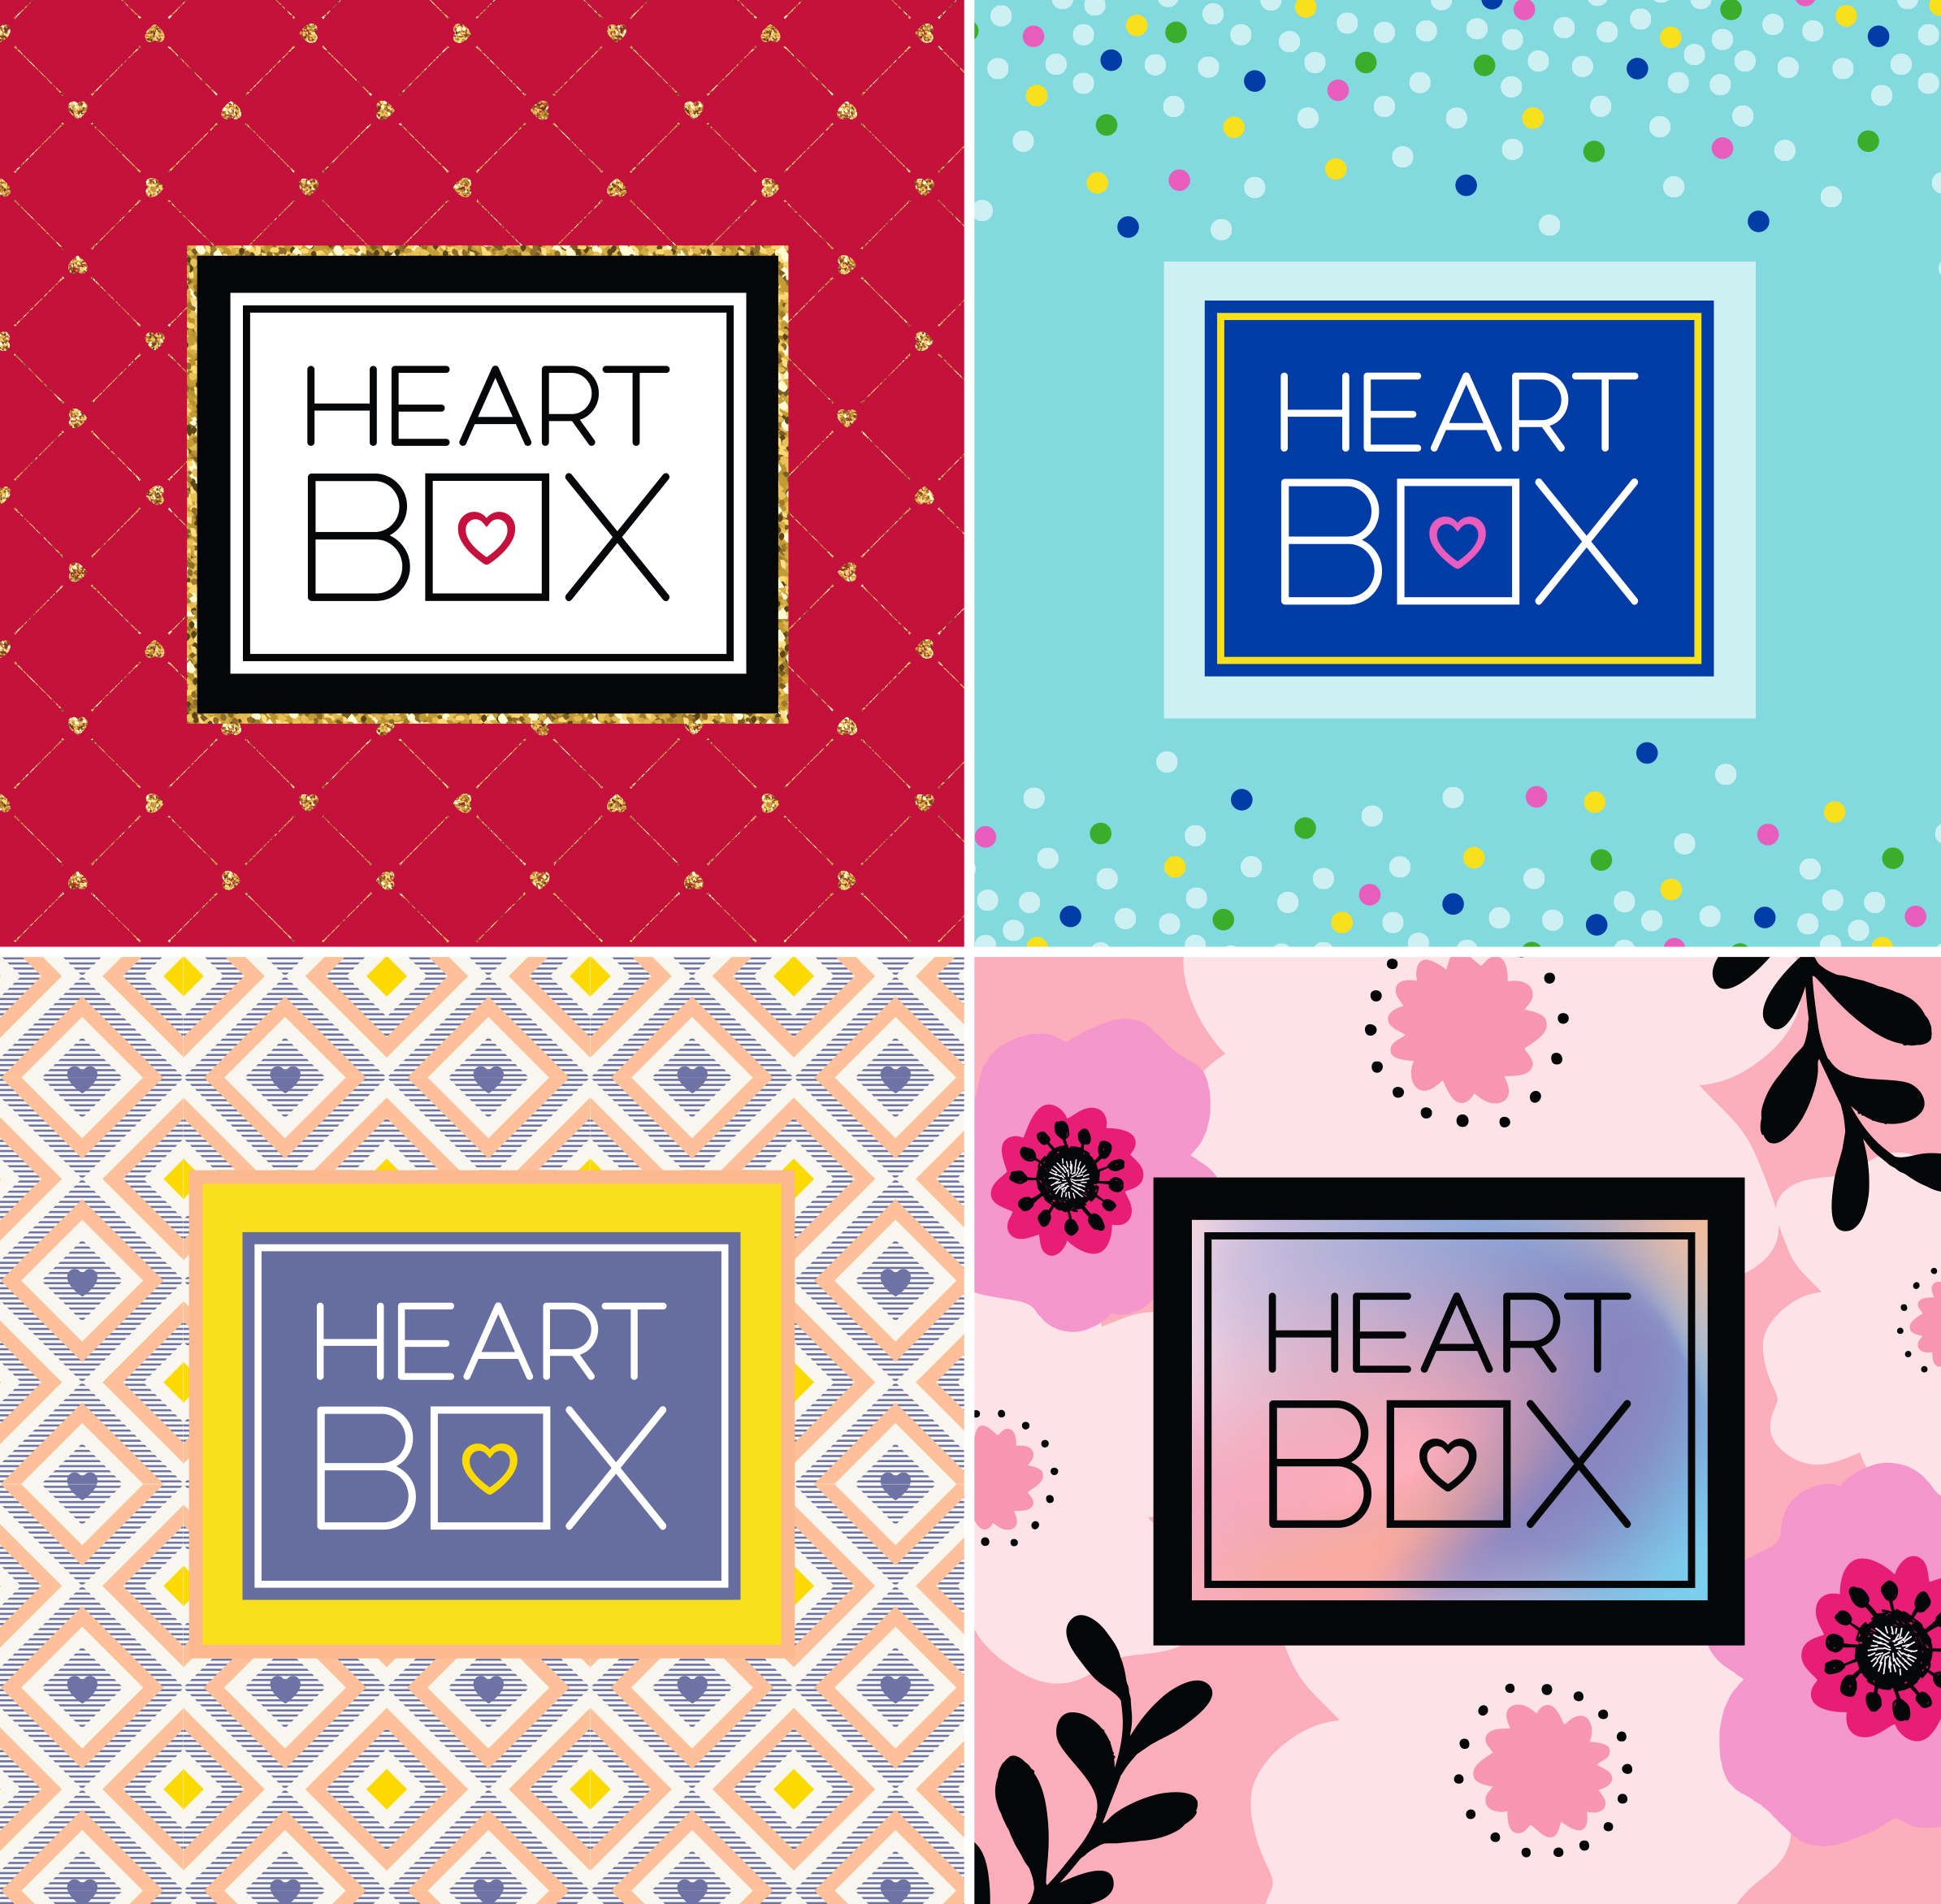 HeartBox Marketing Design Design Logo Potential